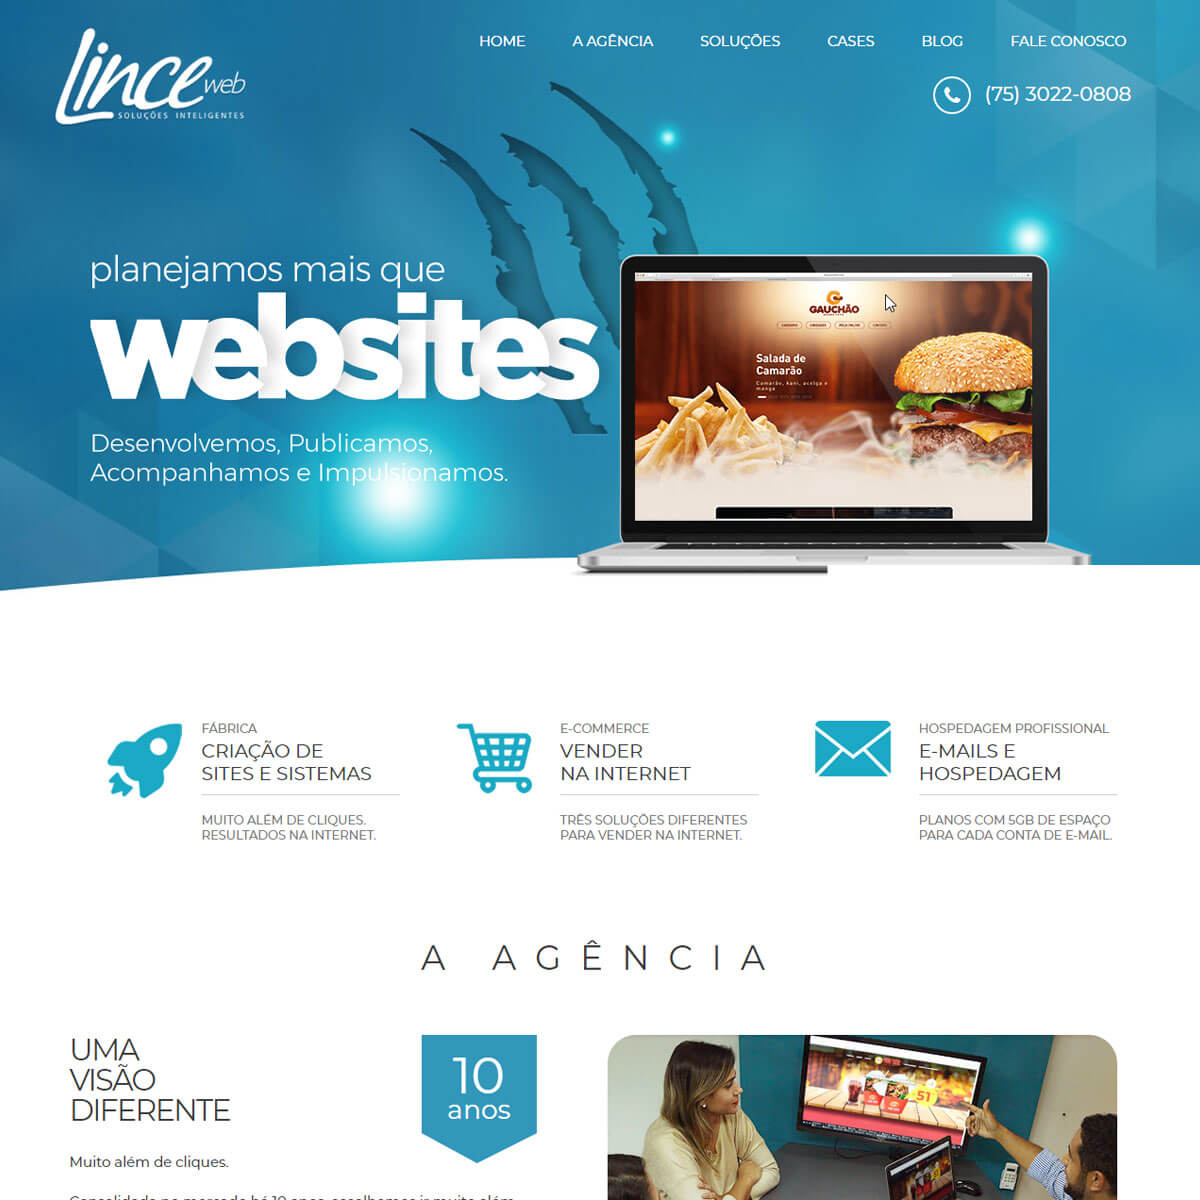 (c) Linceweb.com.br